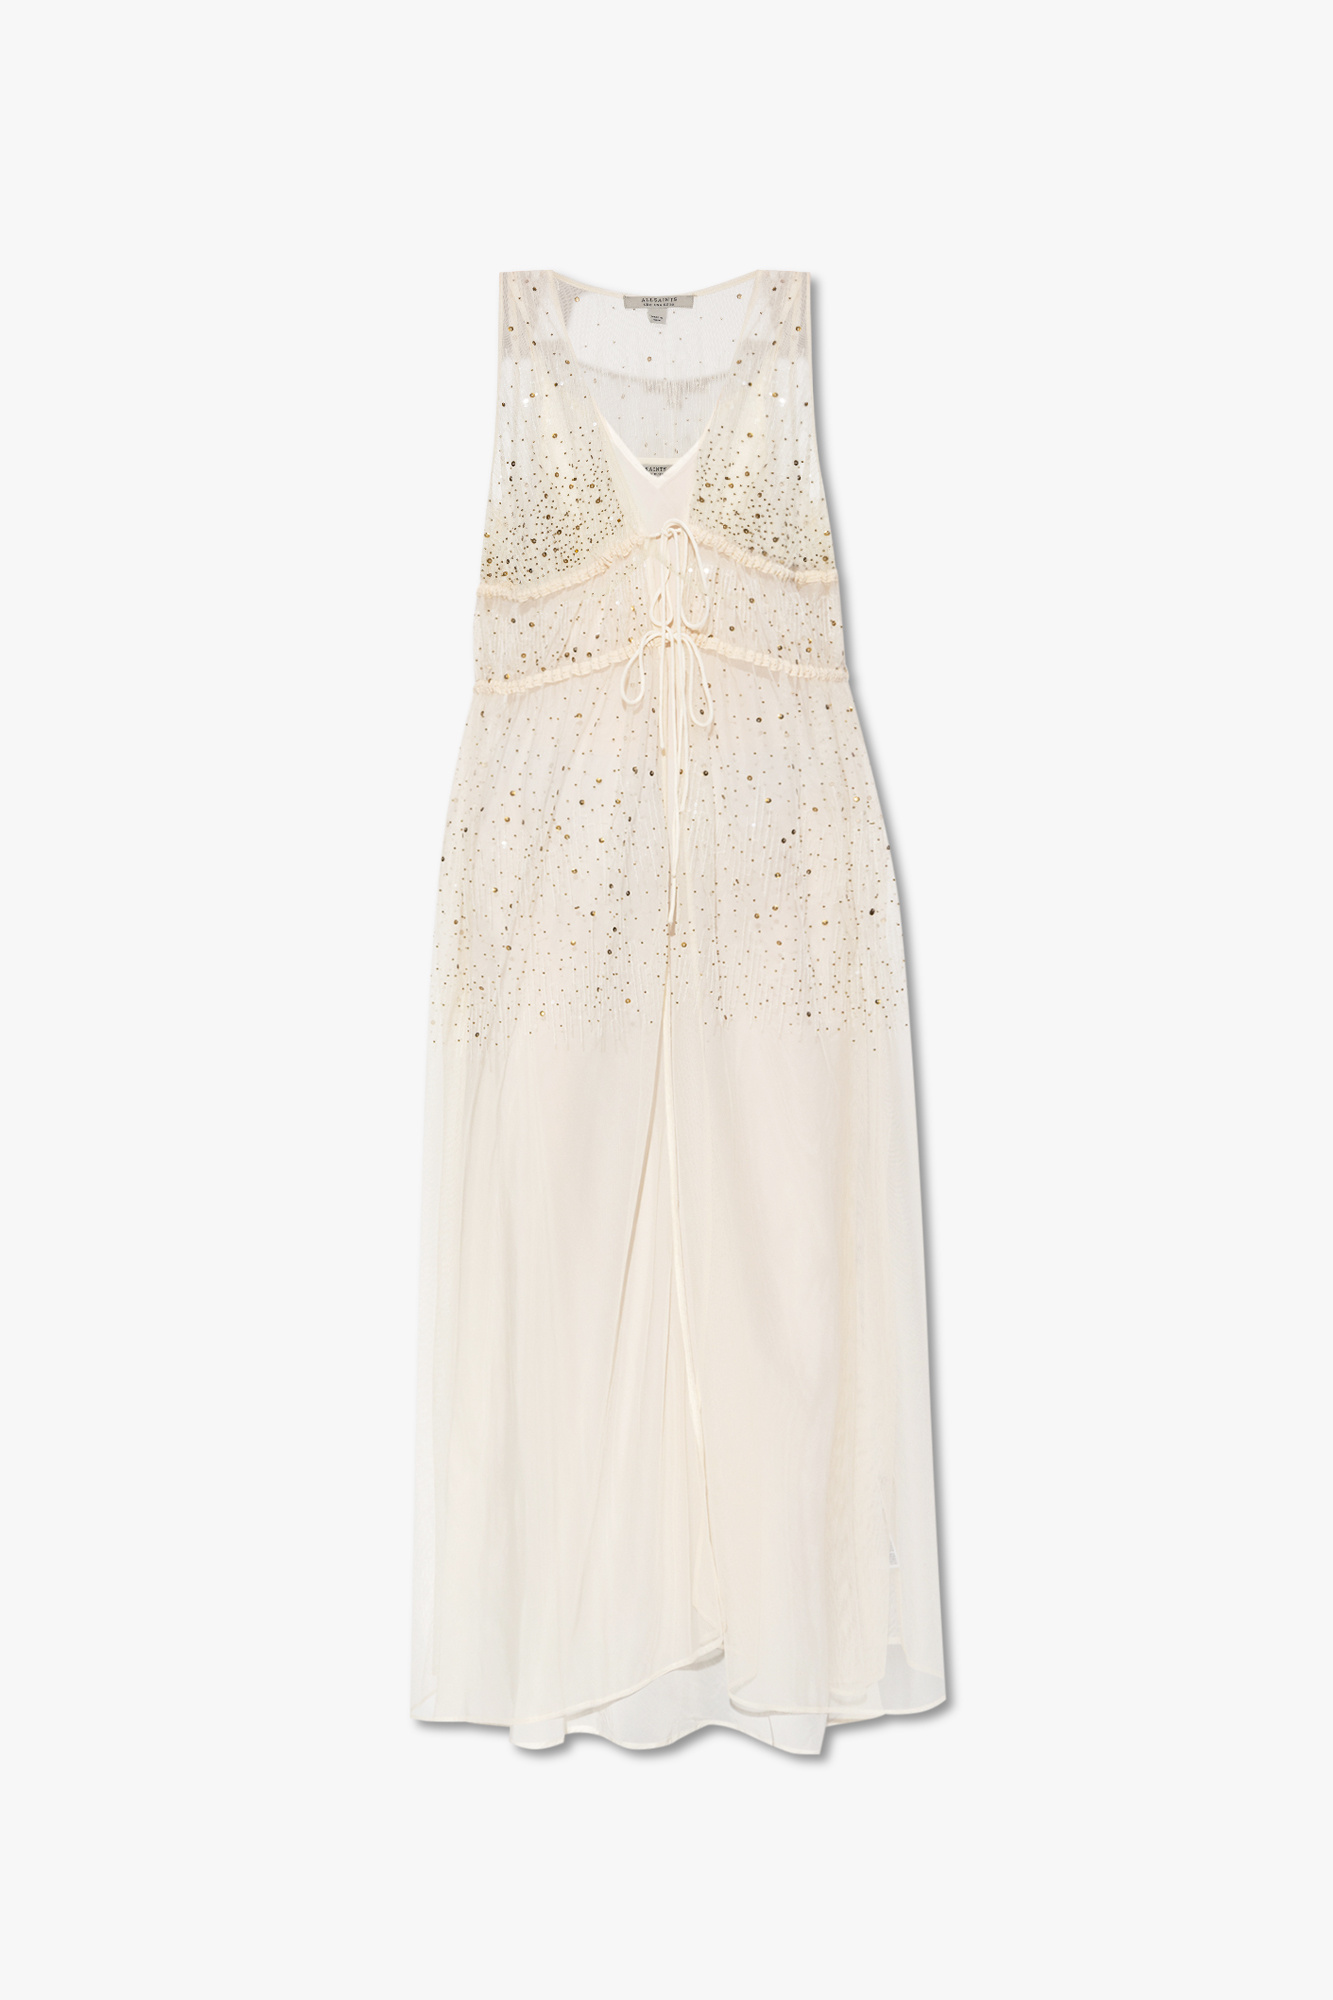 Miss Selfridge Premium Embellished Floral Maxi Dress in White